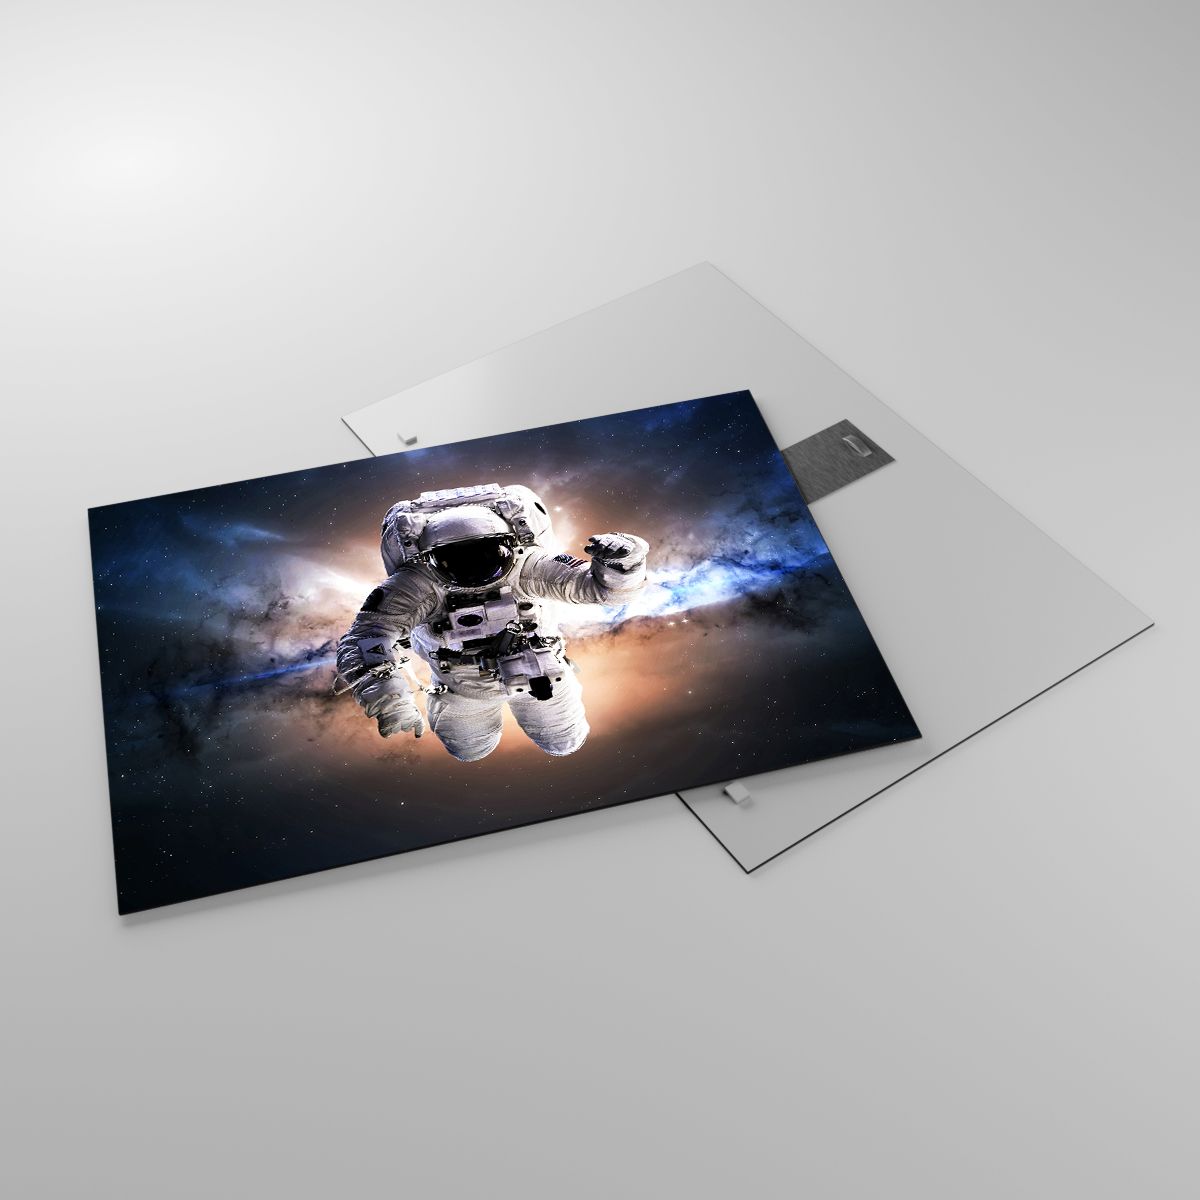 Glasbild Astronaut, Glasbild Kosmos, Glasbild Kosmonaut, Glasbild Universum, Glasbild Galaxis